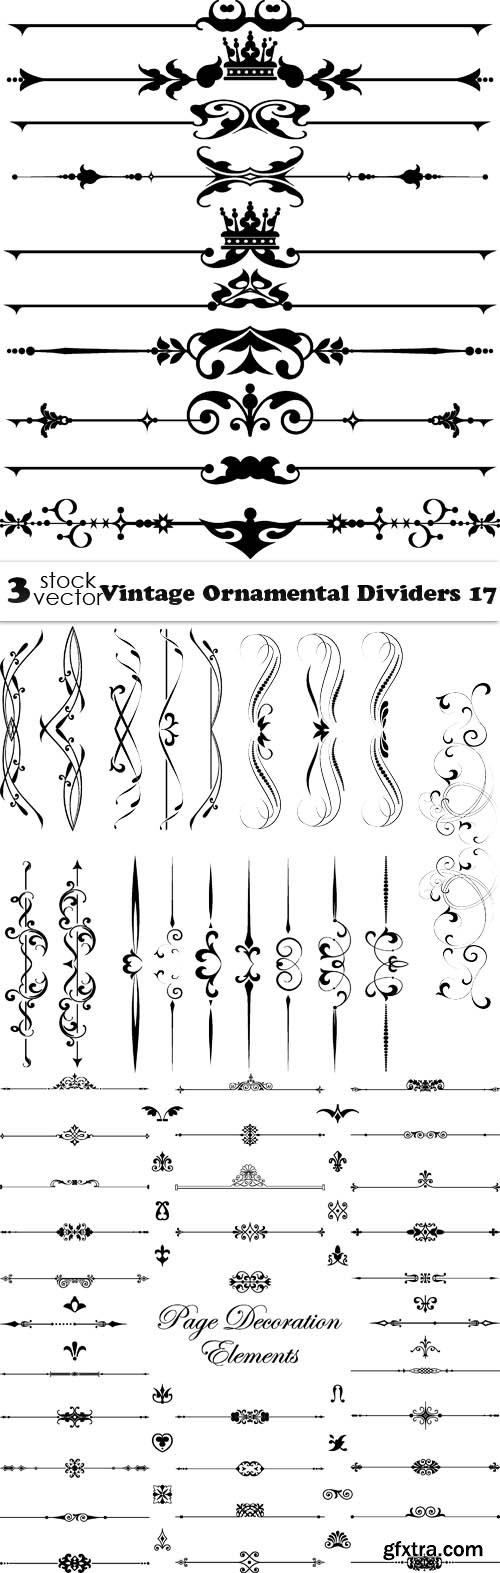 Vectors - Vintage Ornamental Dividers 17